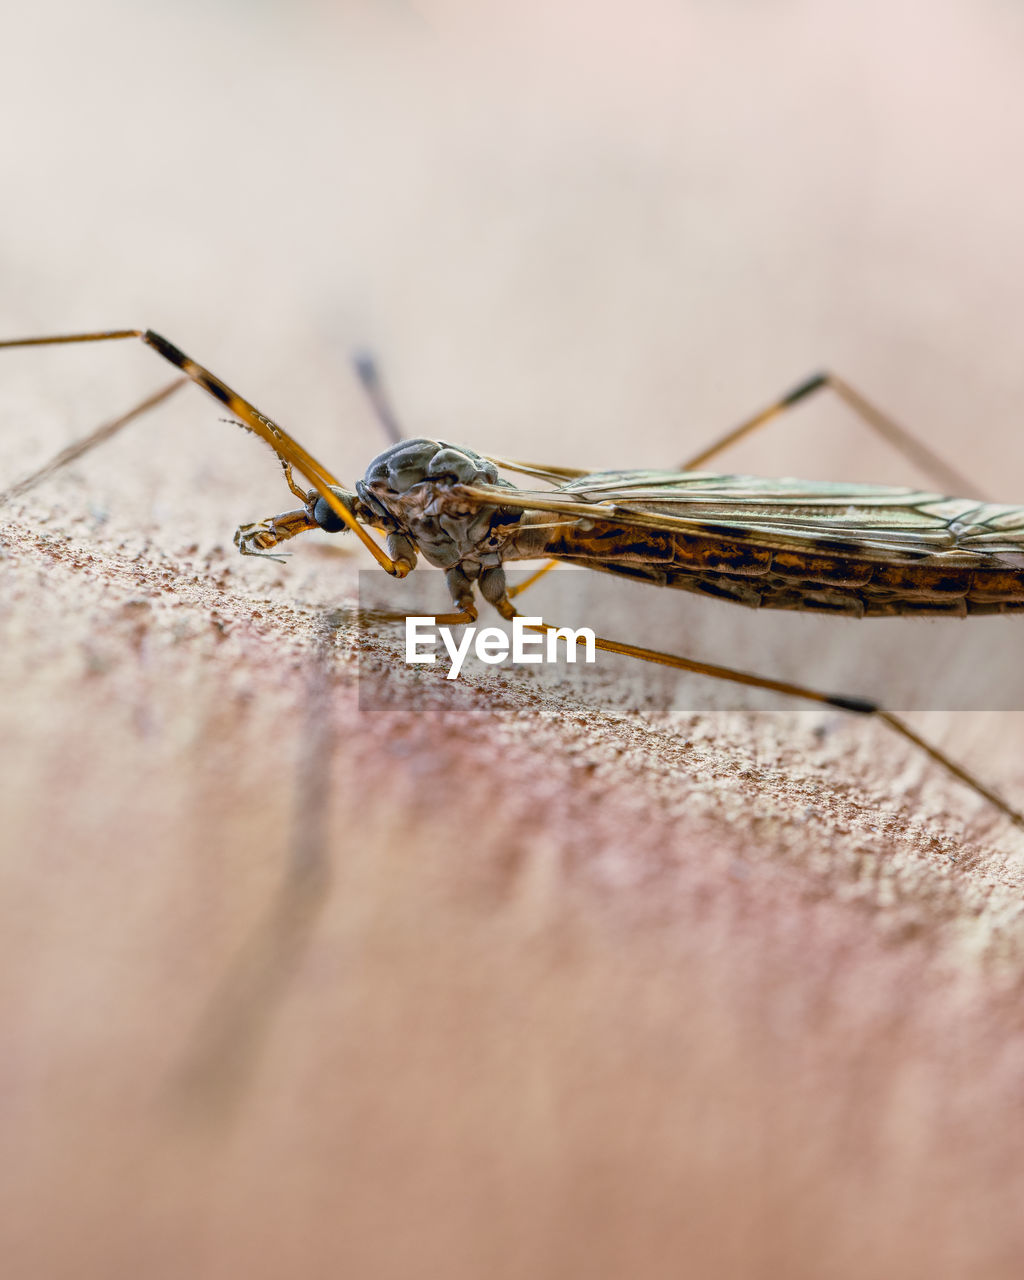 A close-up of a limoniidae mosquito